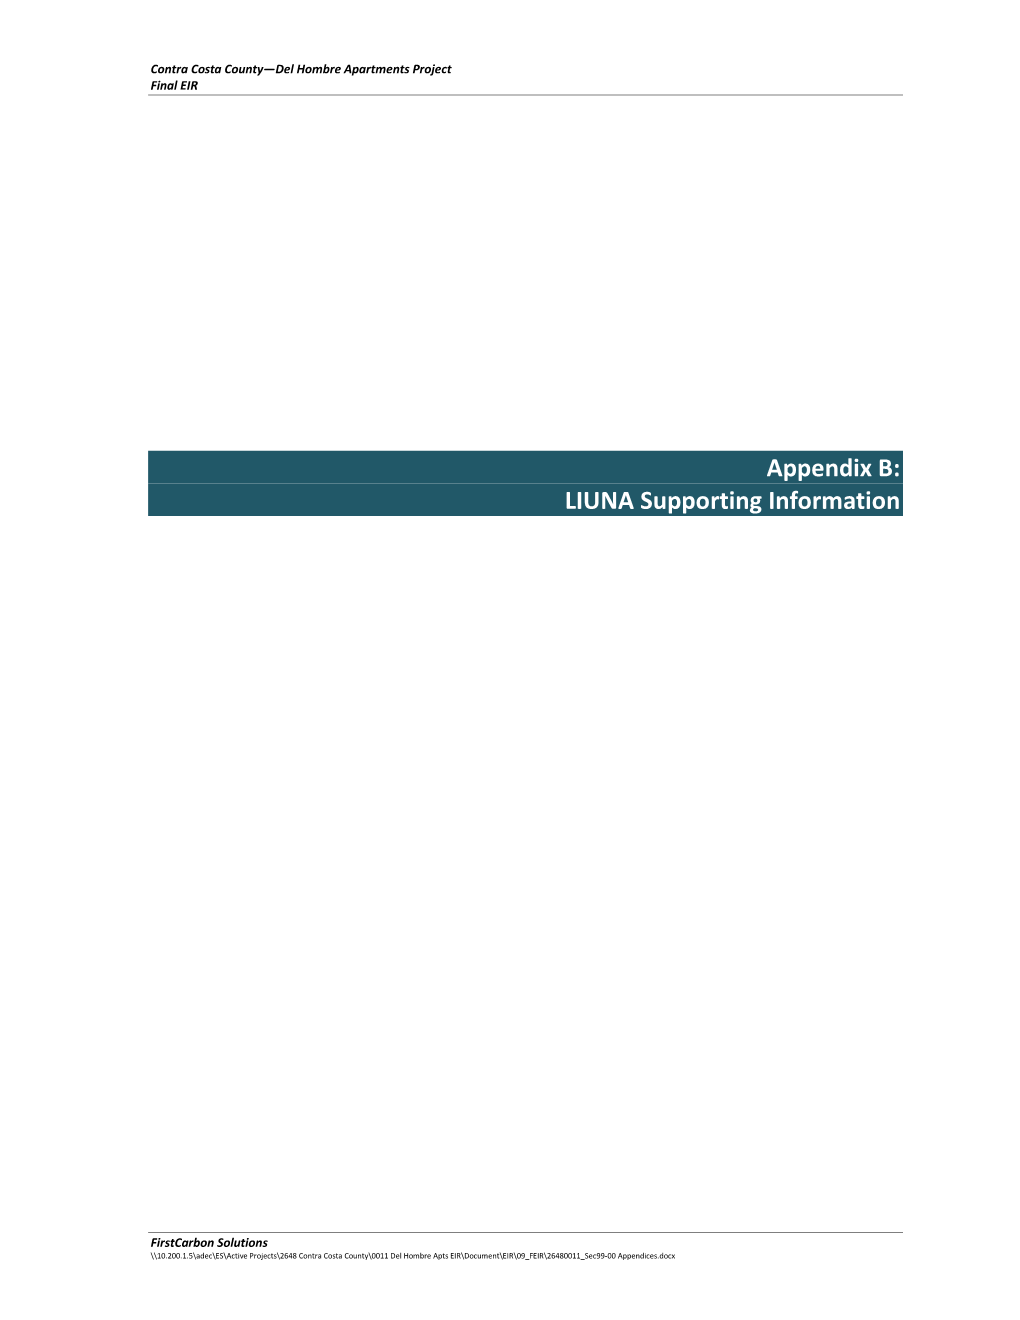 Appendix B: LIUNA Supporting Information